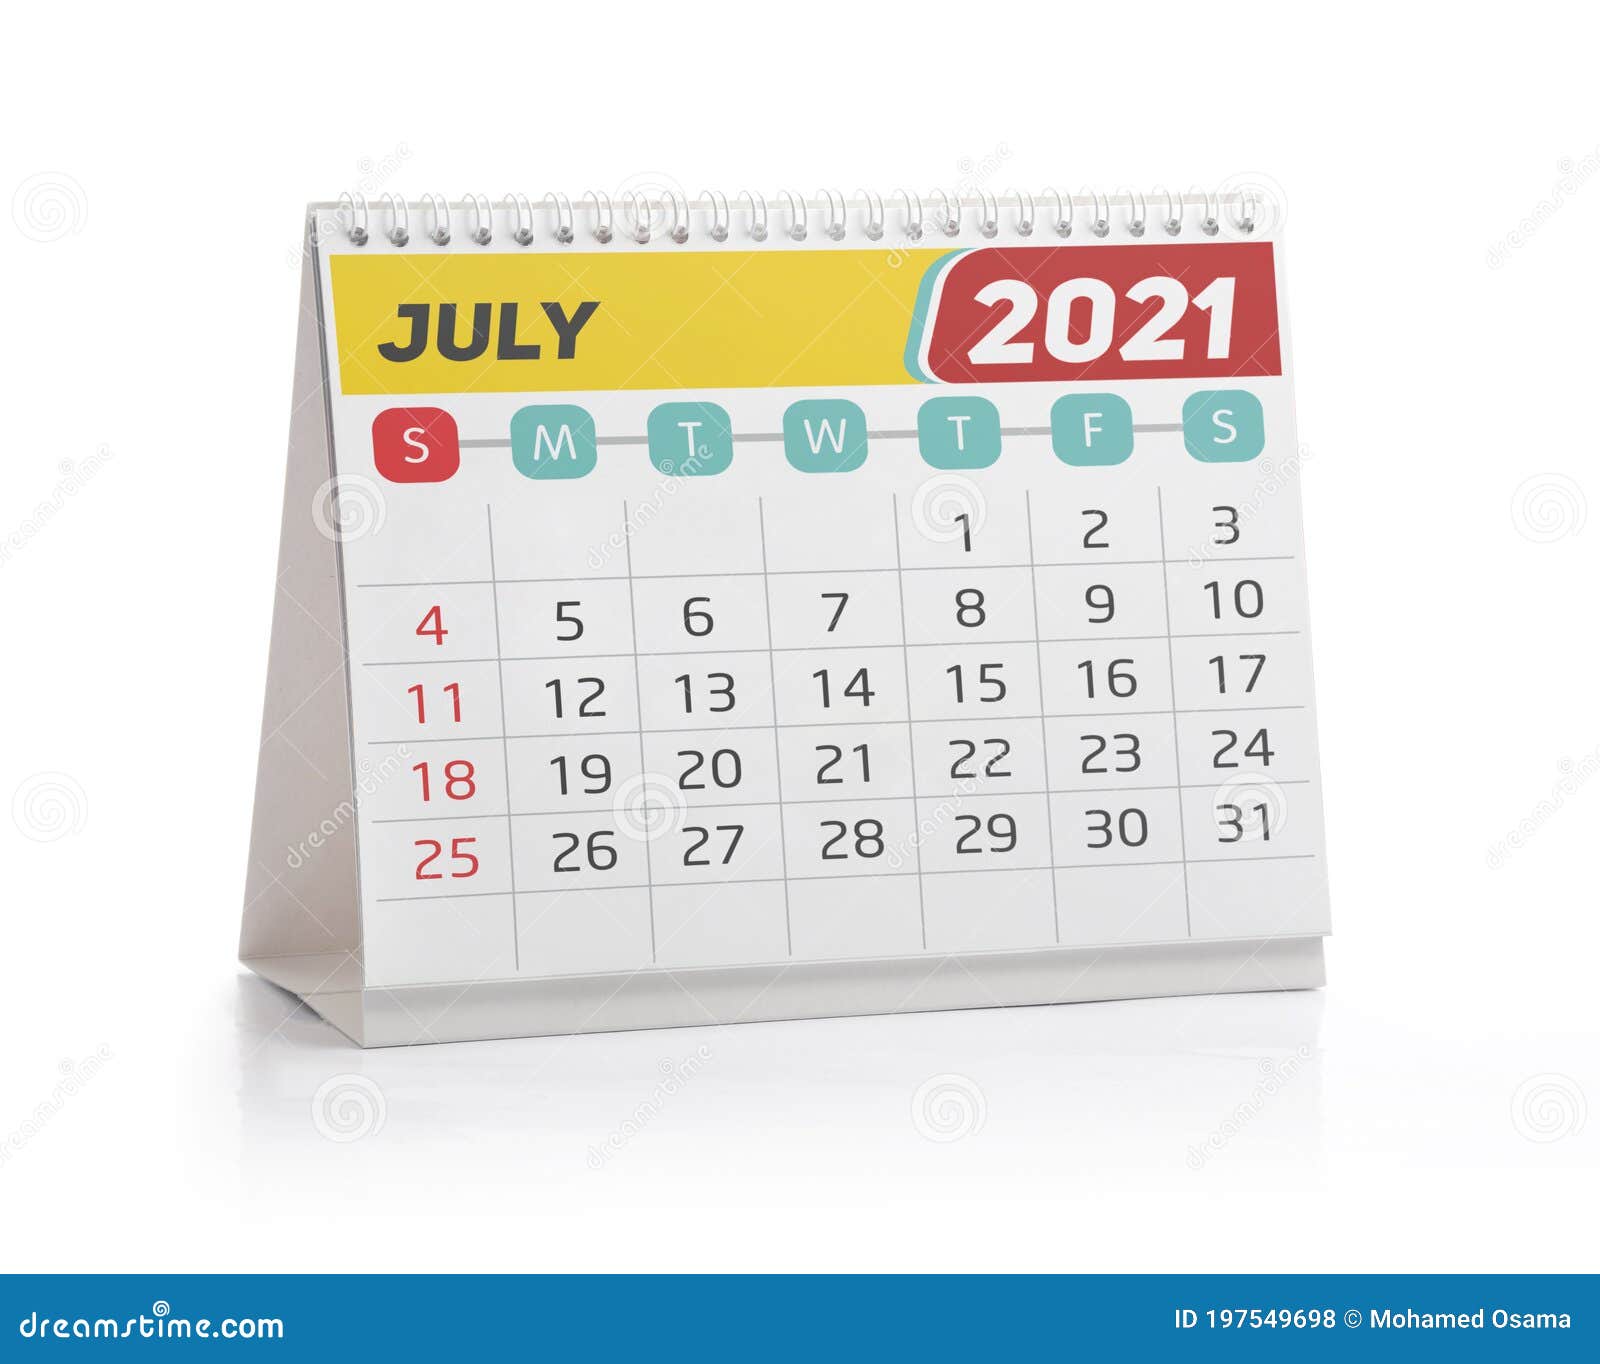 July 2021 calendar